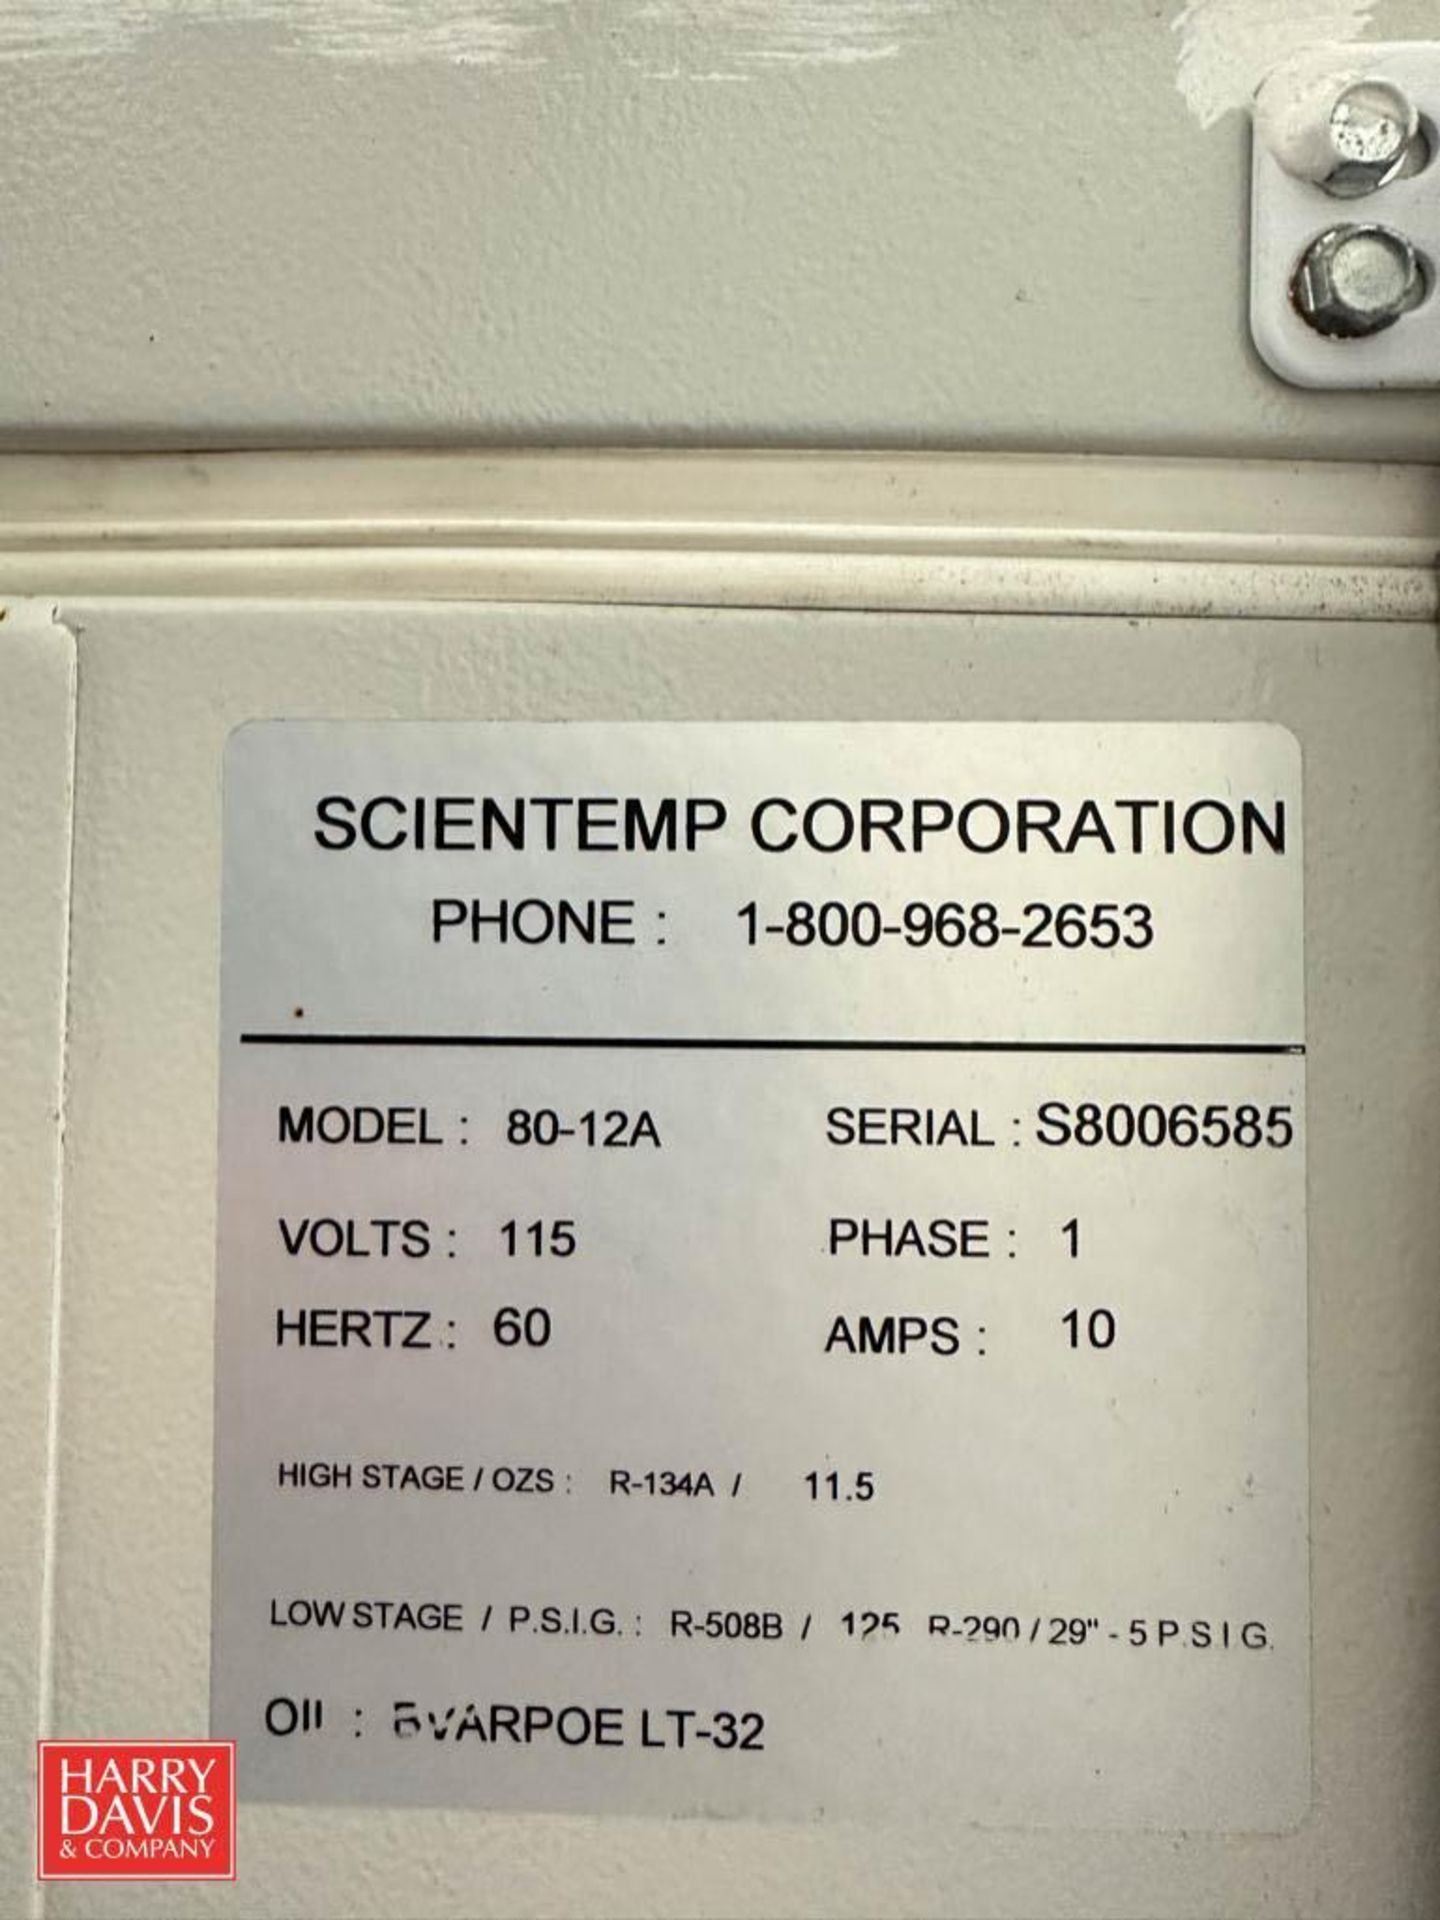 Scientemp Low Temperature Portable Chest Freezer, Model: 80-1ZA, S/N: S8006585 - Image 2 of 2